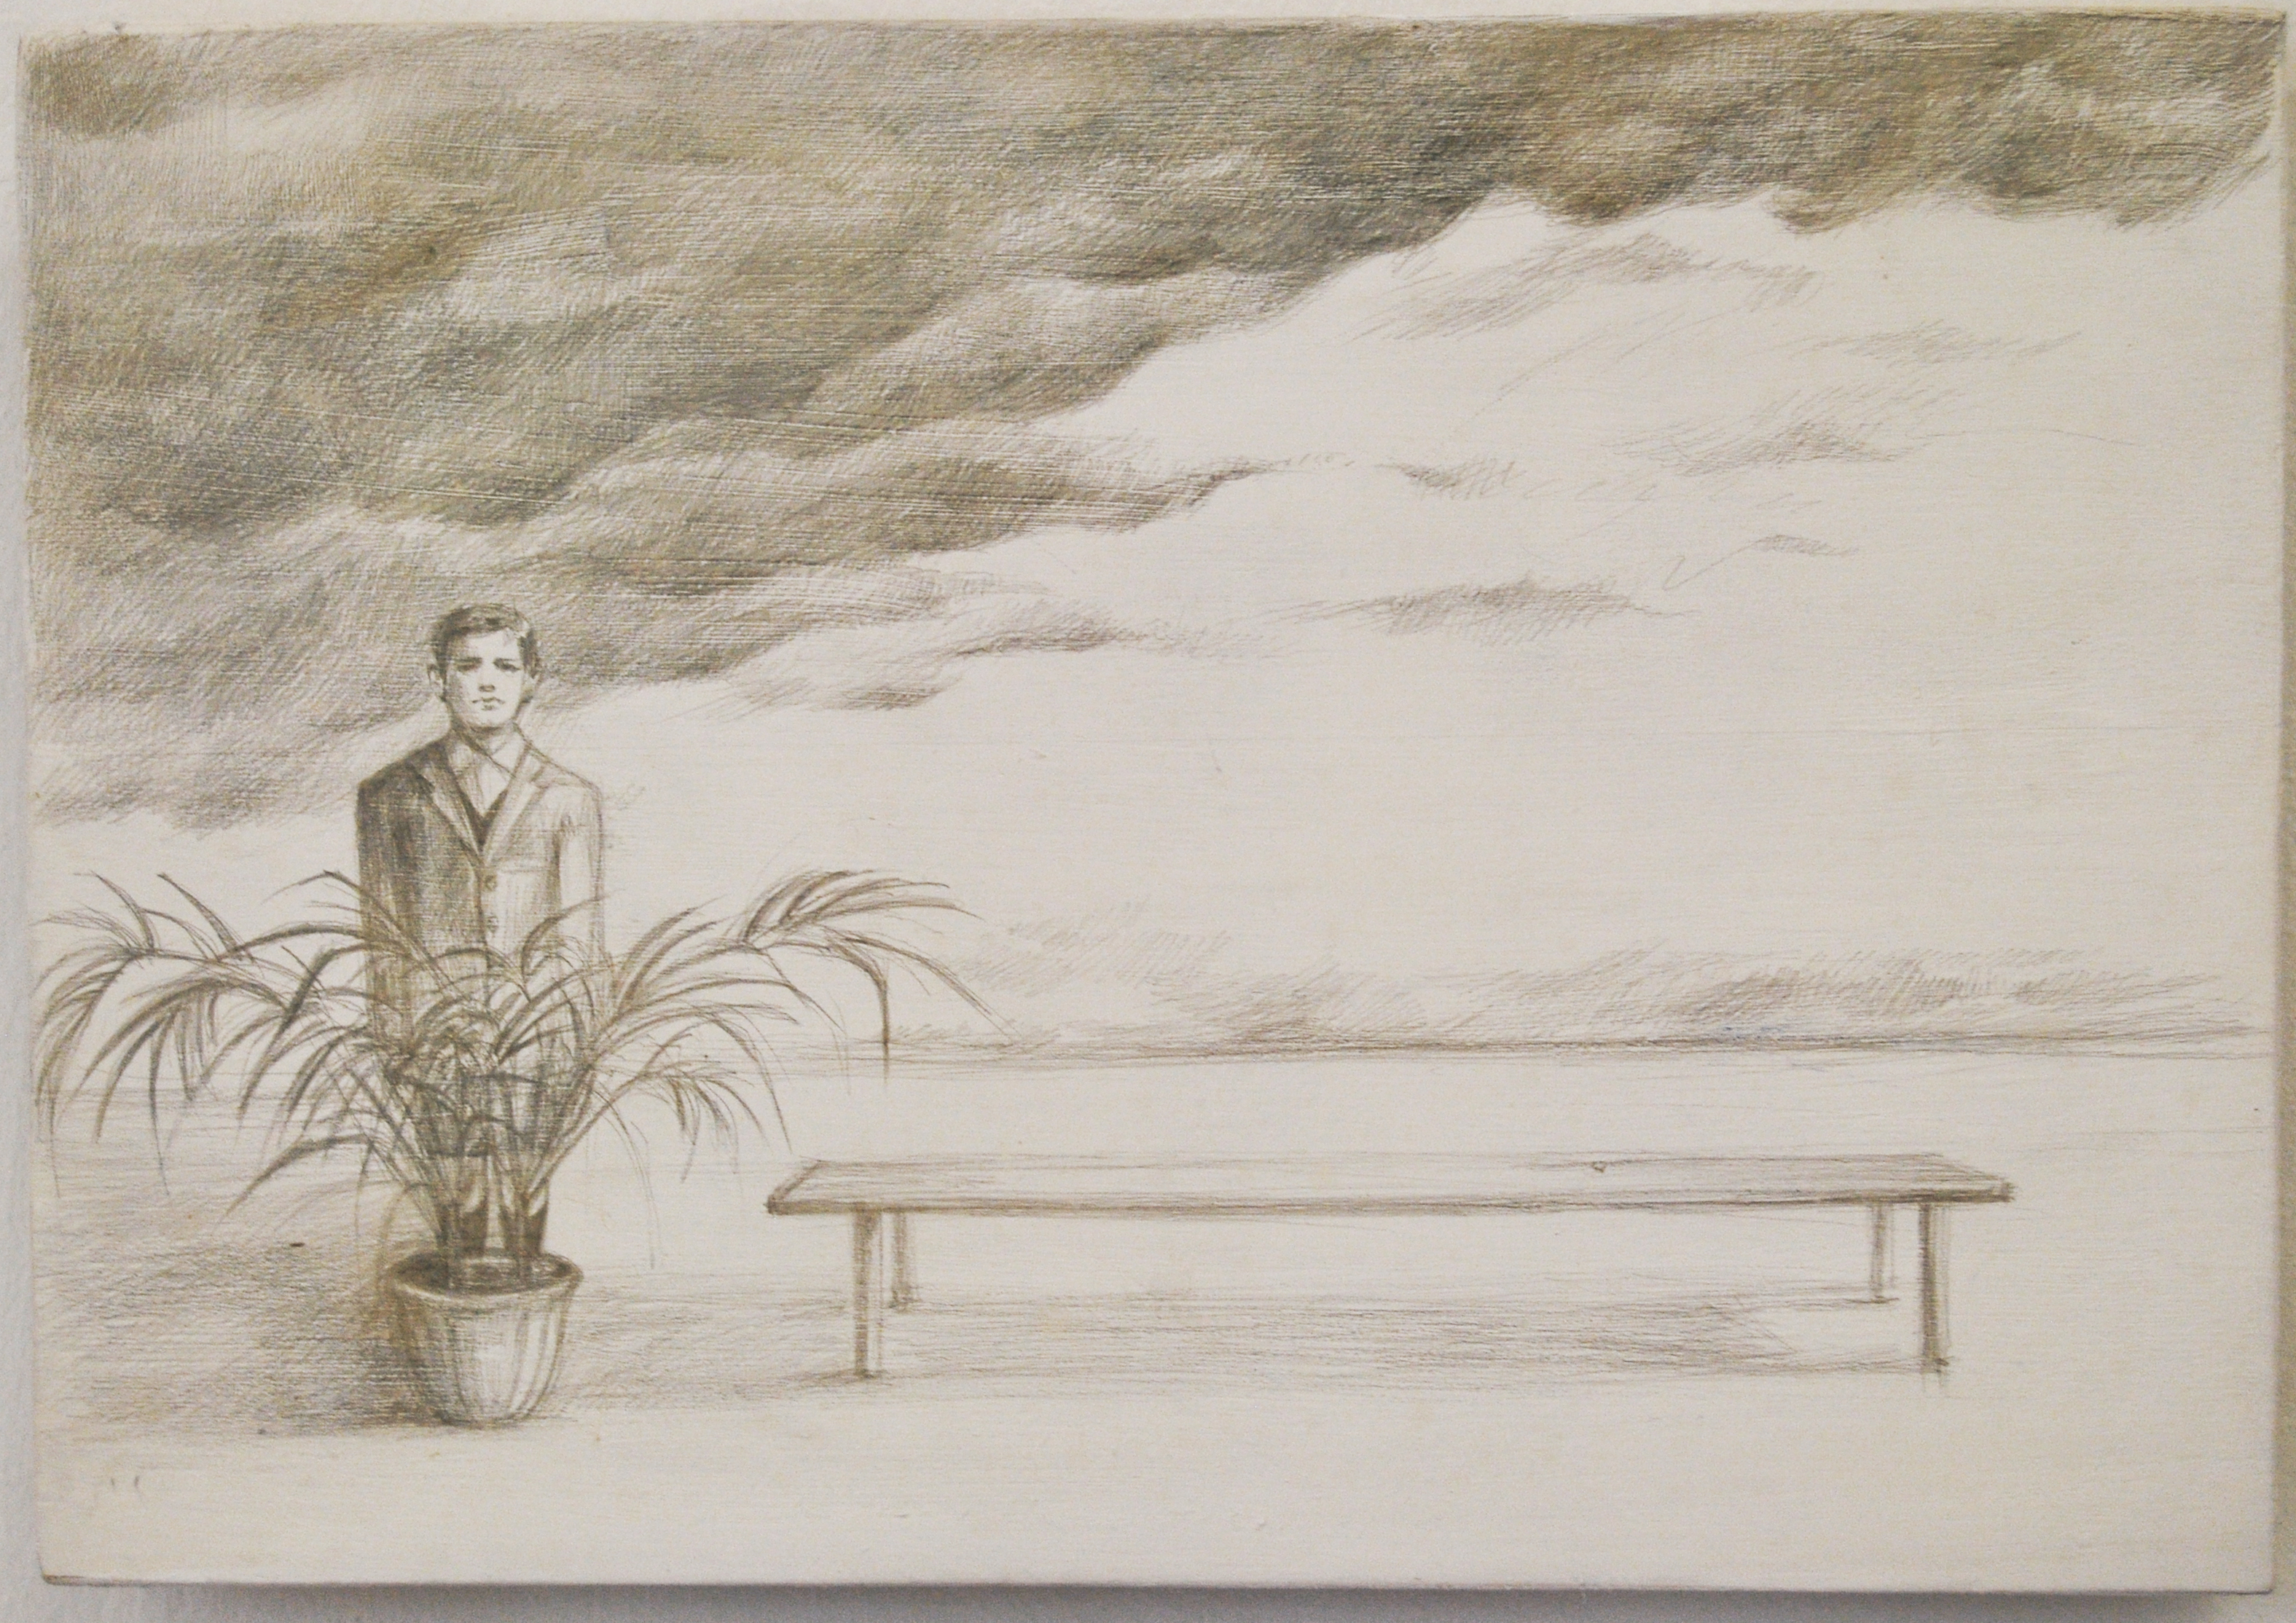 Cornelia Badelita, oooo II, 2014, cm 30 x 21, Incisione punta d’argento su tavola di legno